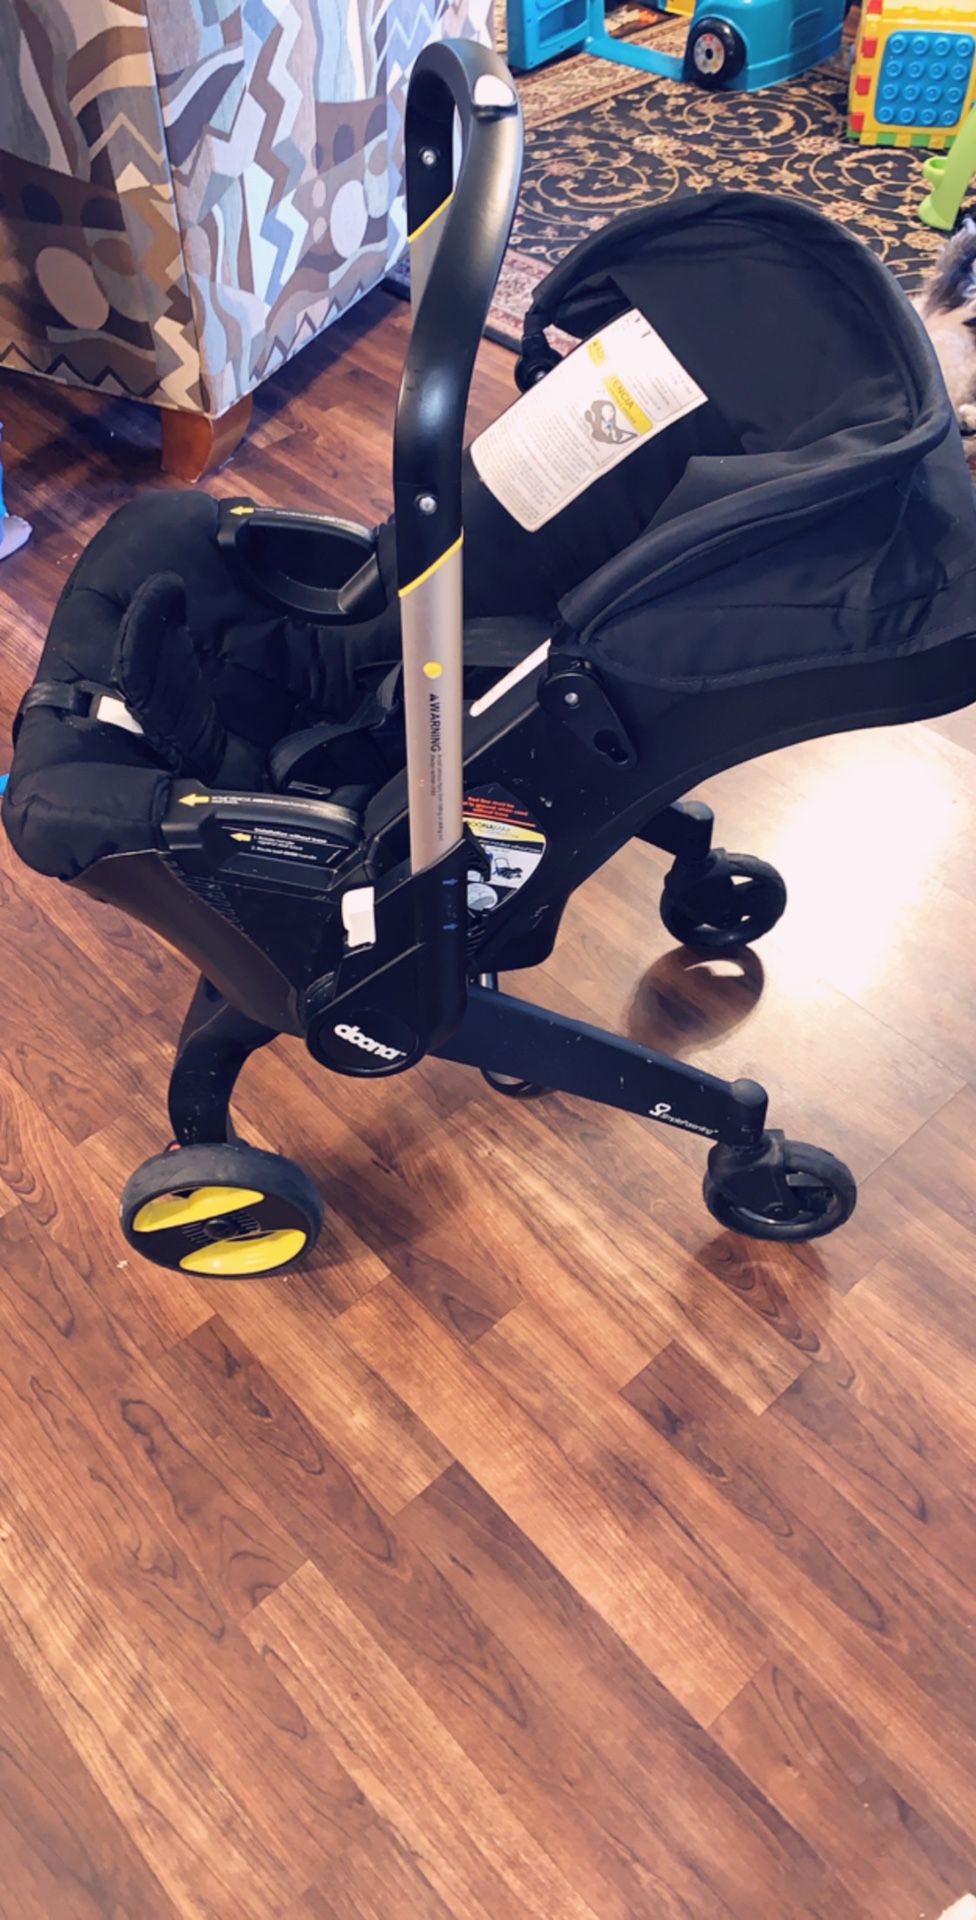 Doona car seat/stroller infant insert included